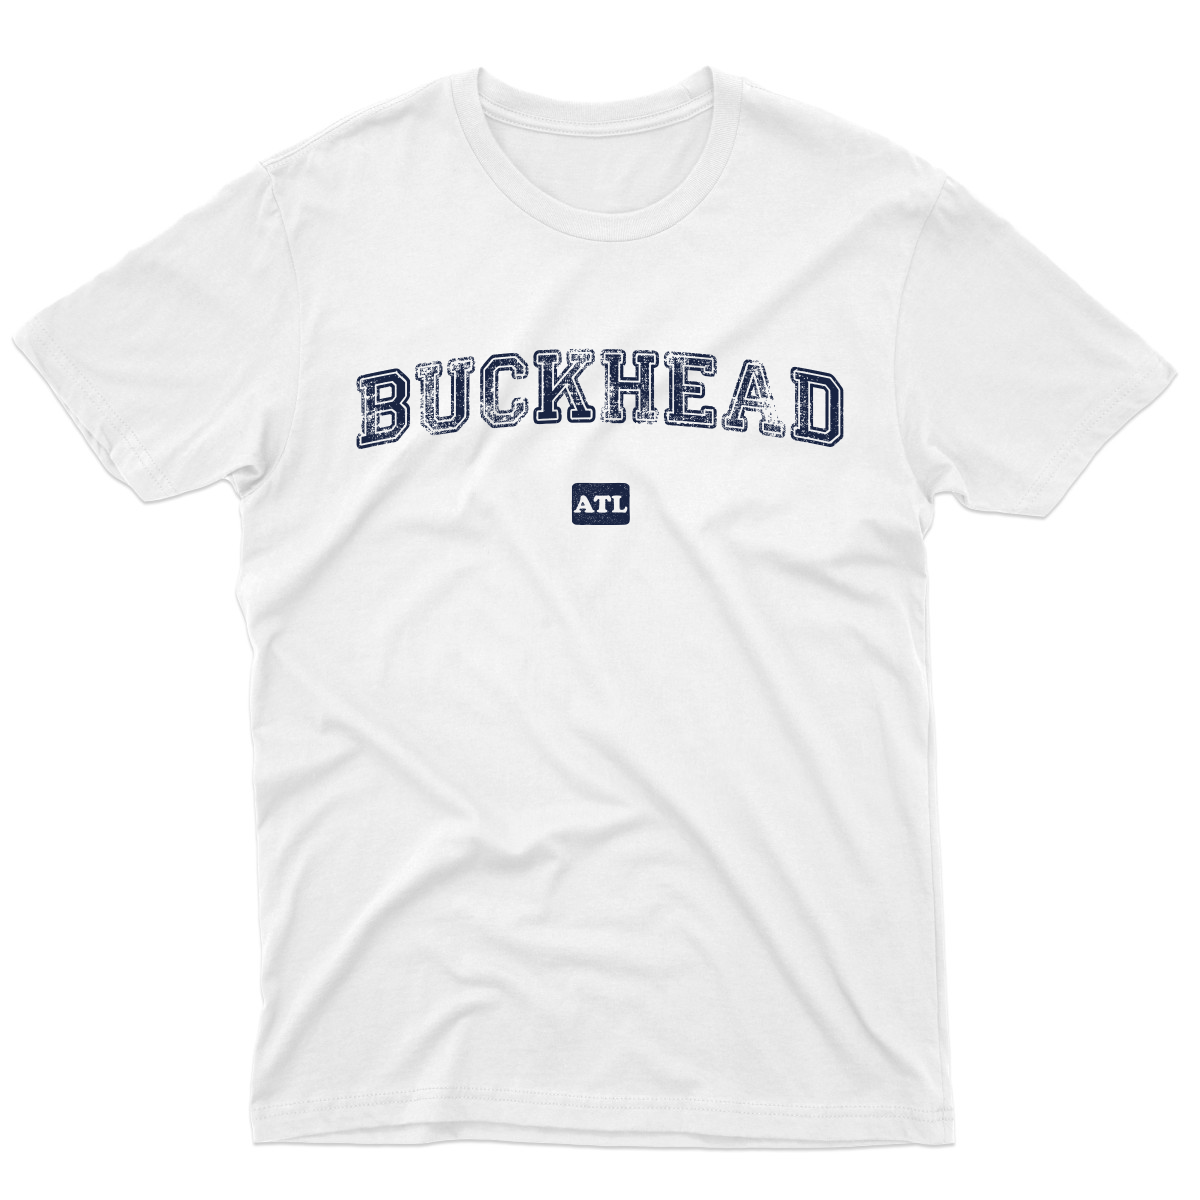 Buckhead ATL Represent Men's T-shirt | White